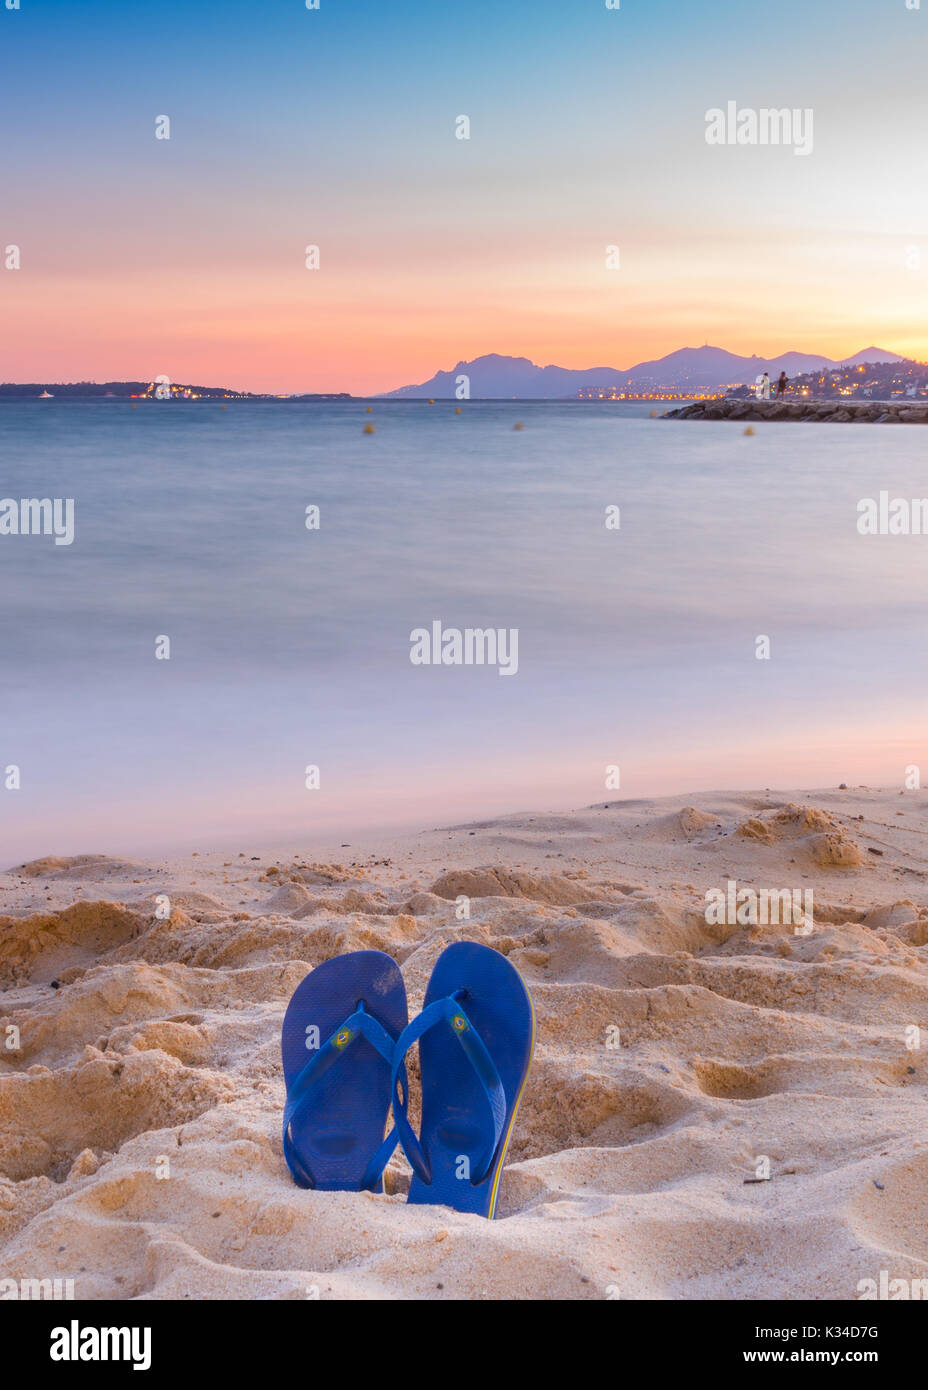 Flip flops on a sandy beach at sunset Stock Photo